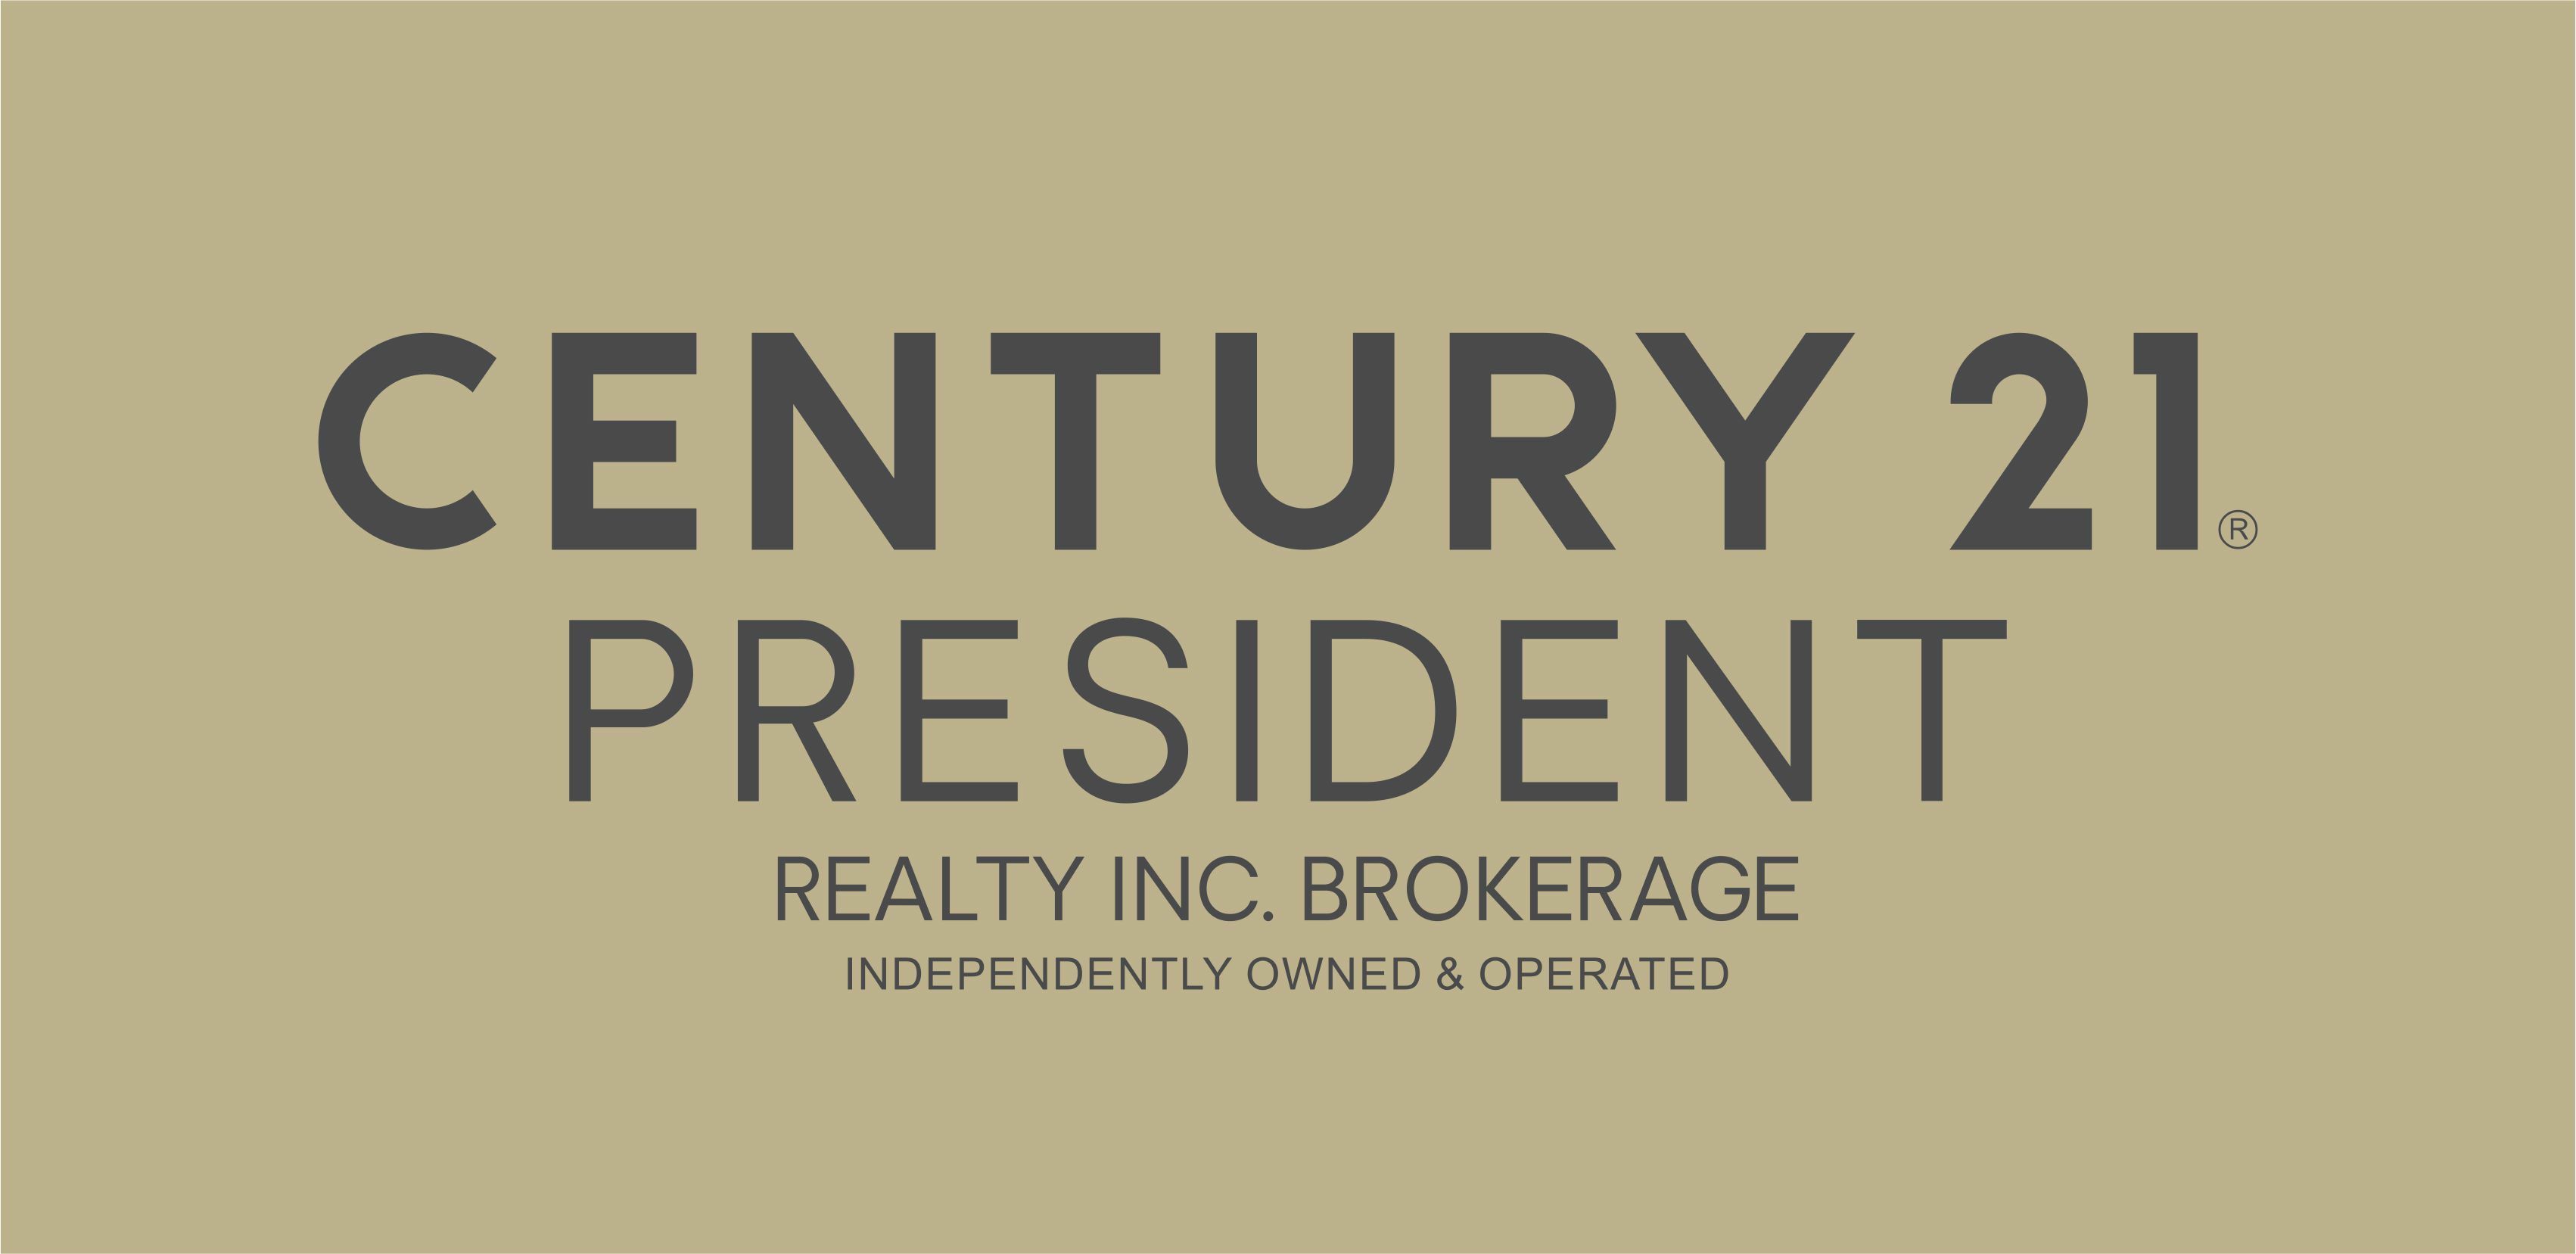 CENTURY 21 President Realty Inc. Brokerage,Brampton,Century 21 Canada